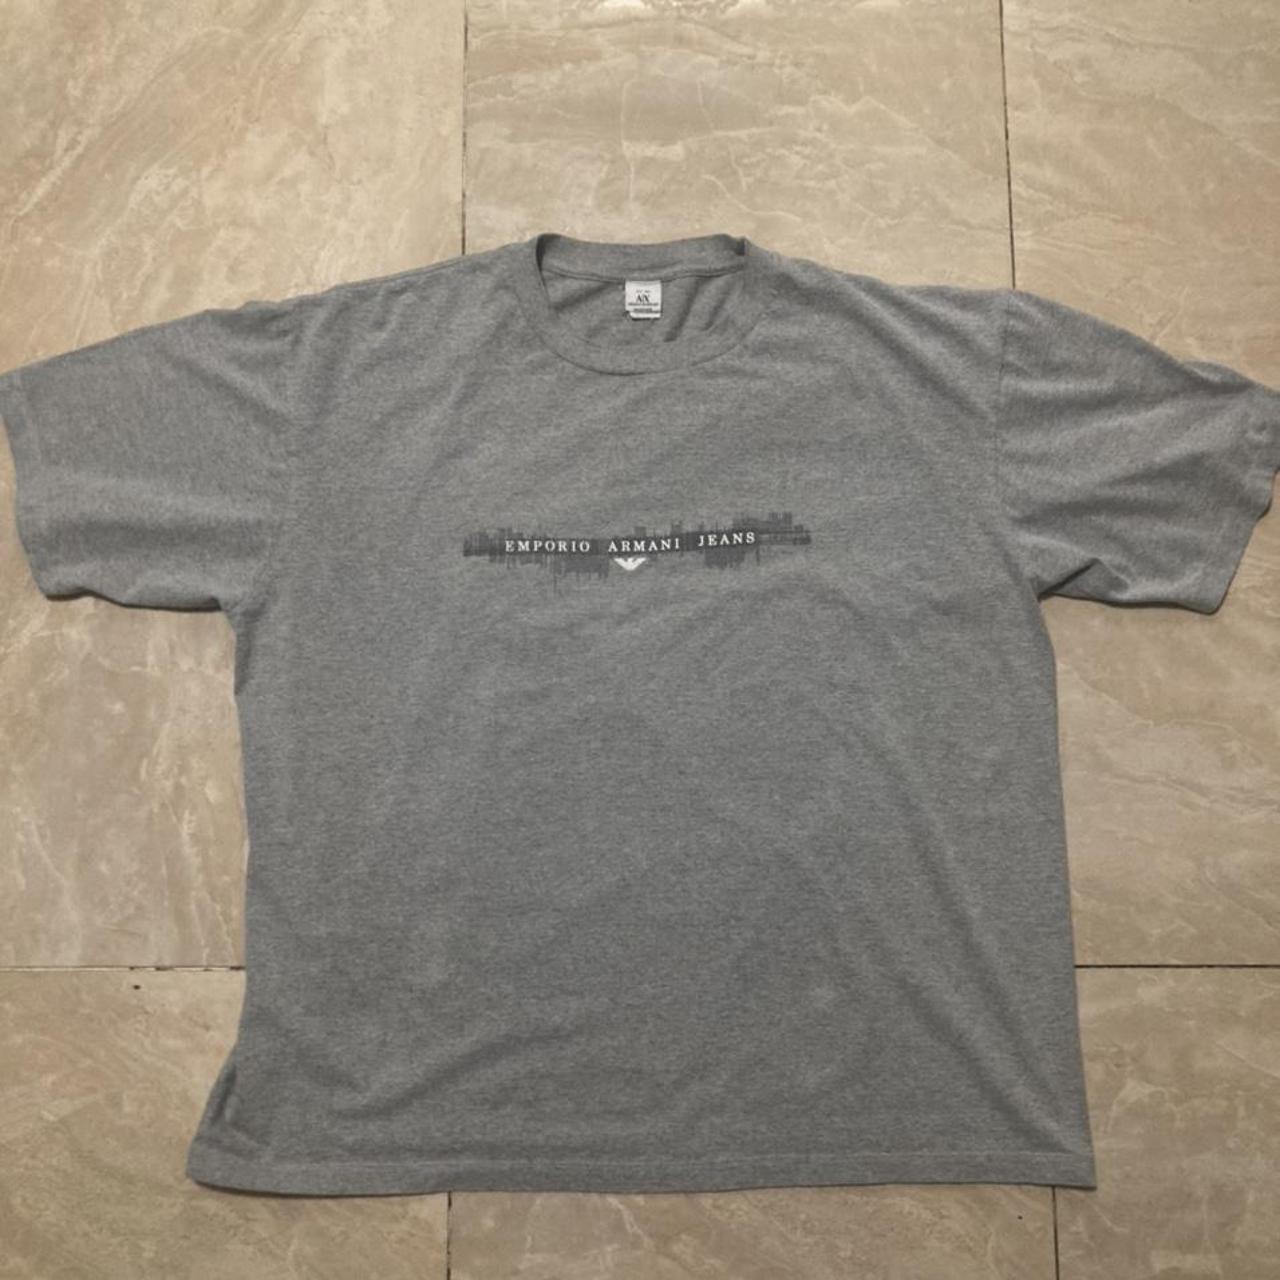 Armani Jeans Men's Grey and Black T-shirt